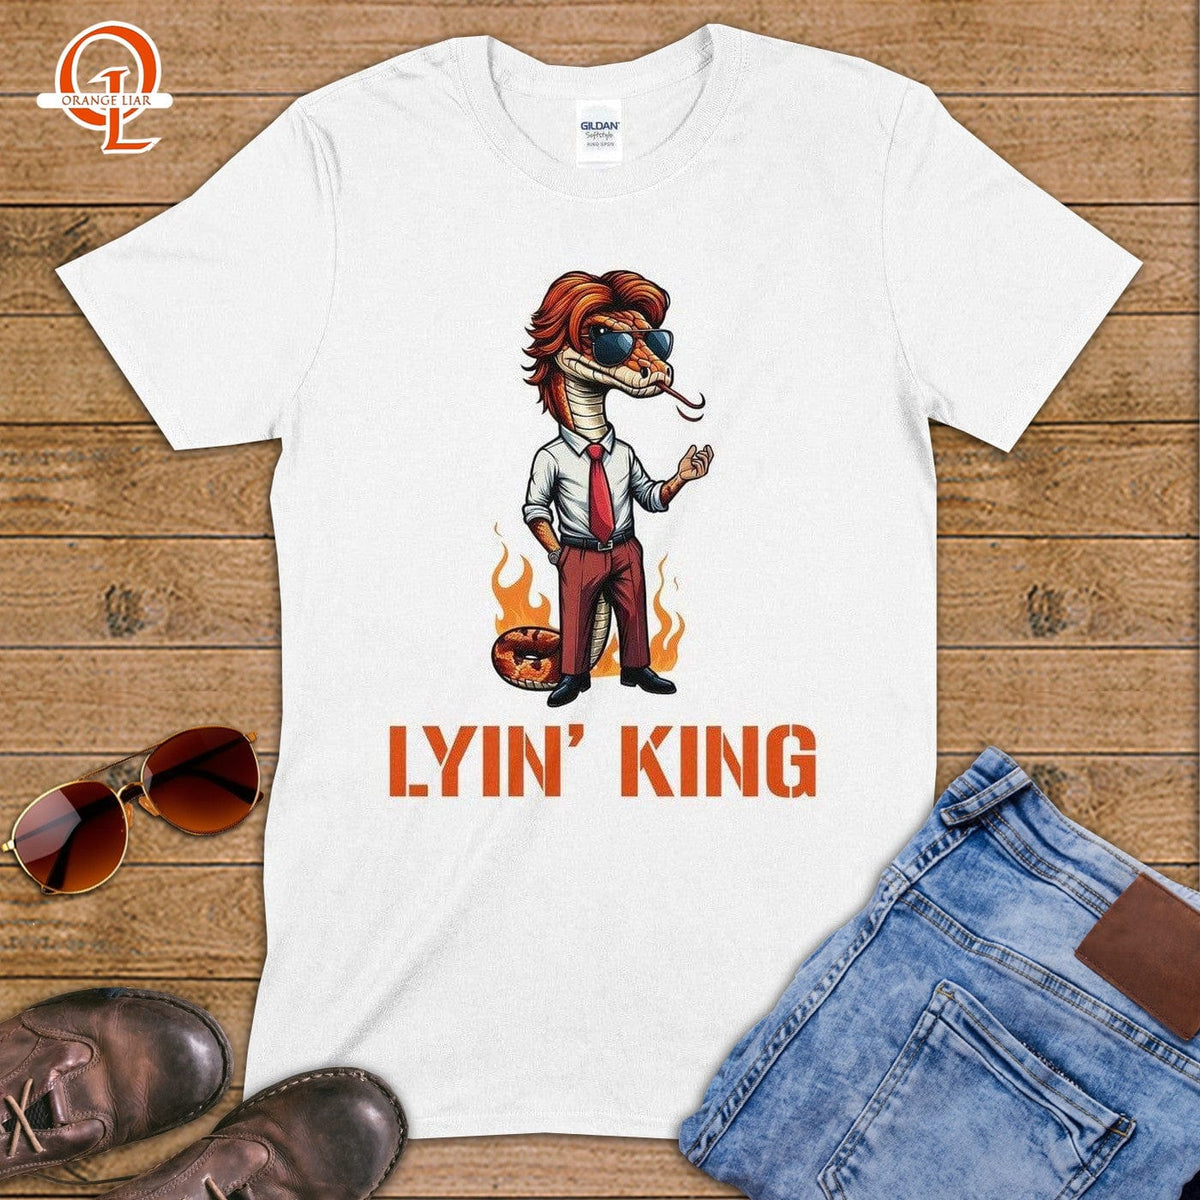 Lyin' King ~ T-Shirt-Orange Liar